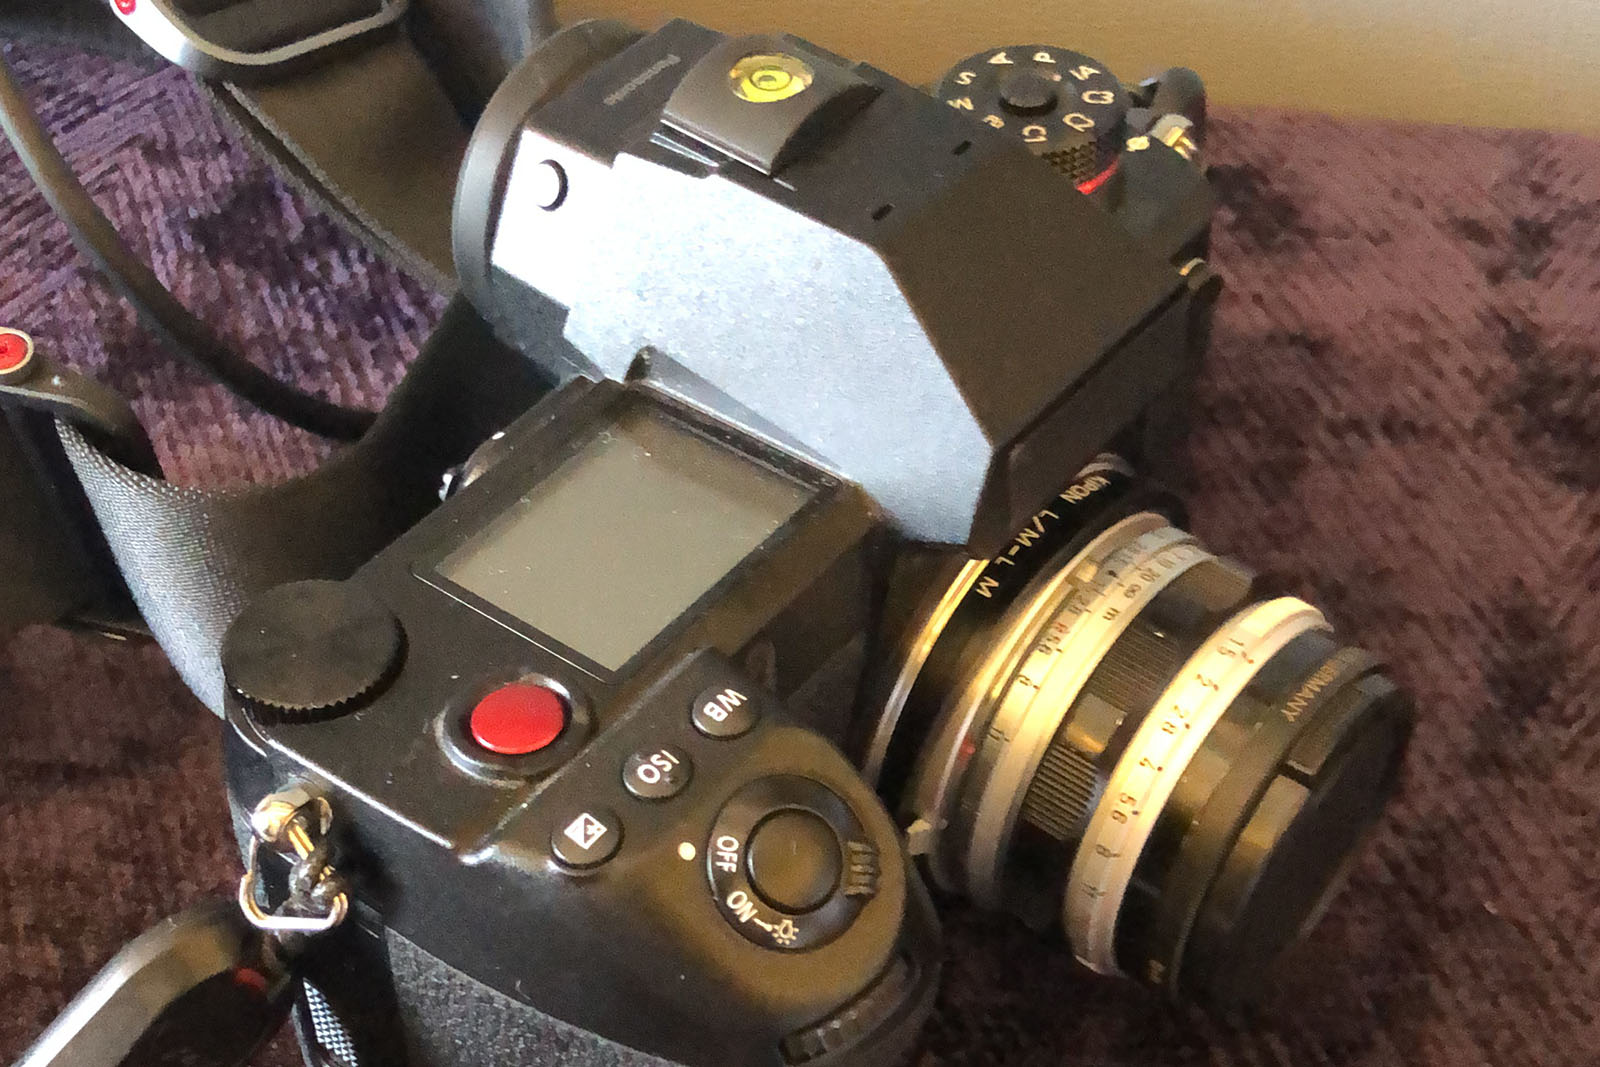 S1H configuration with a Canon LTM lens